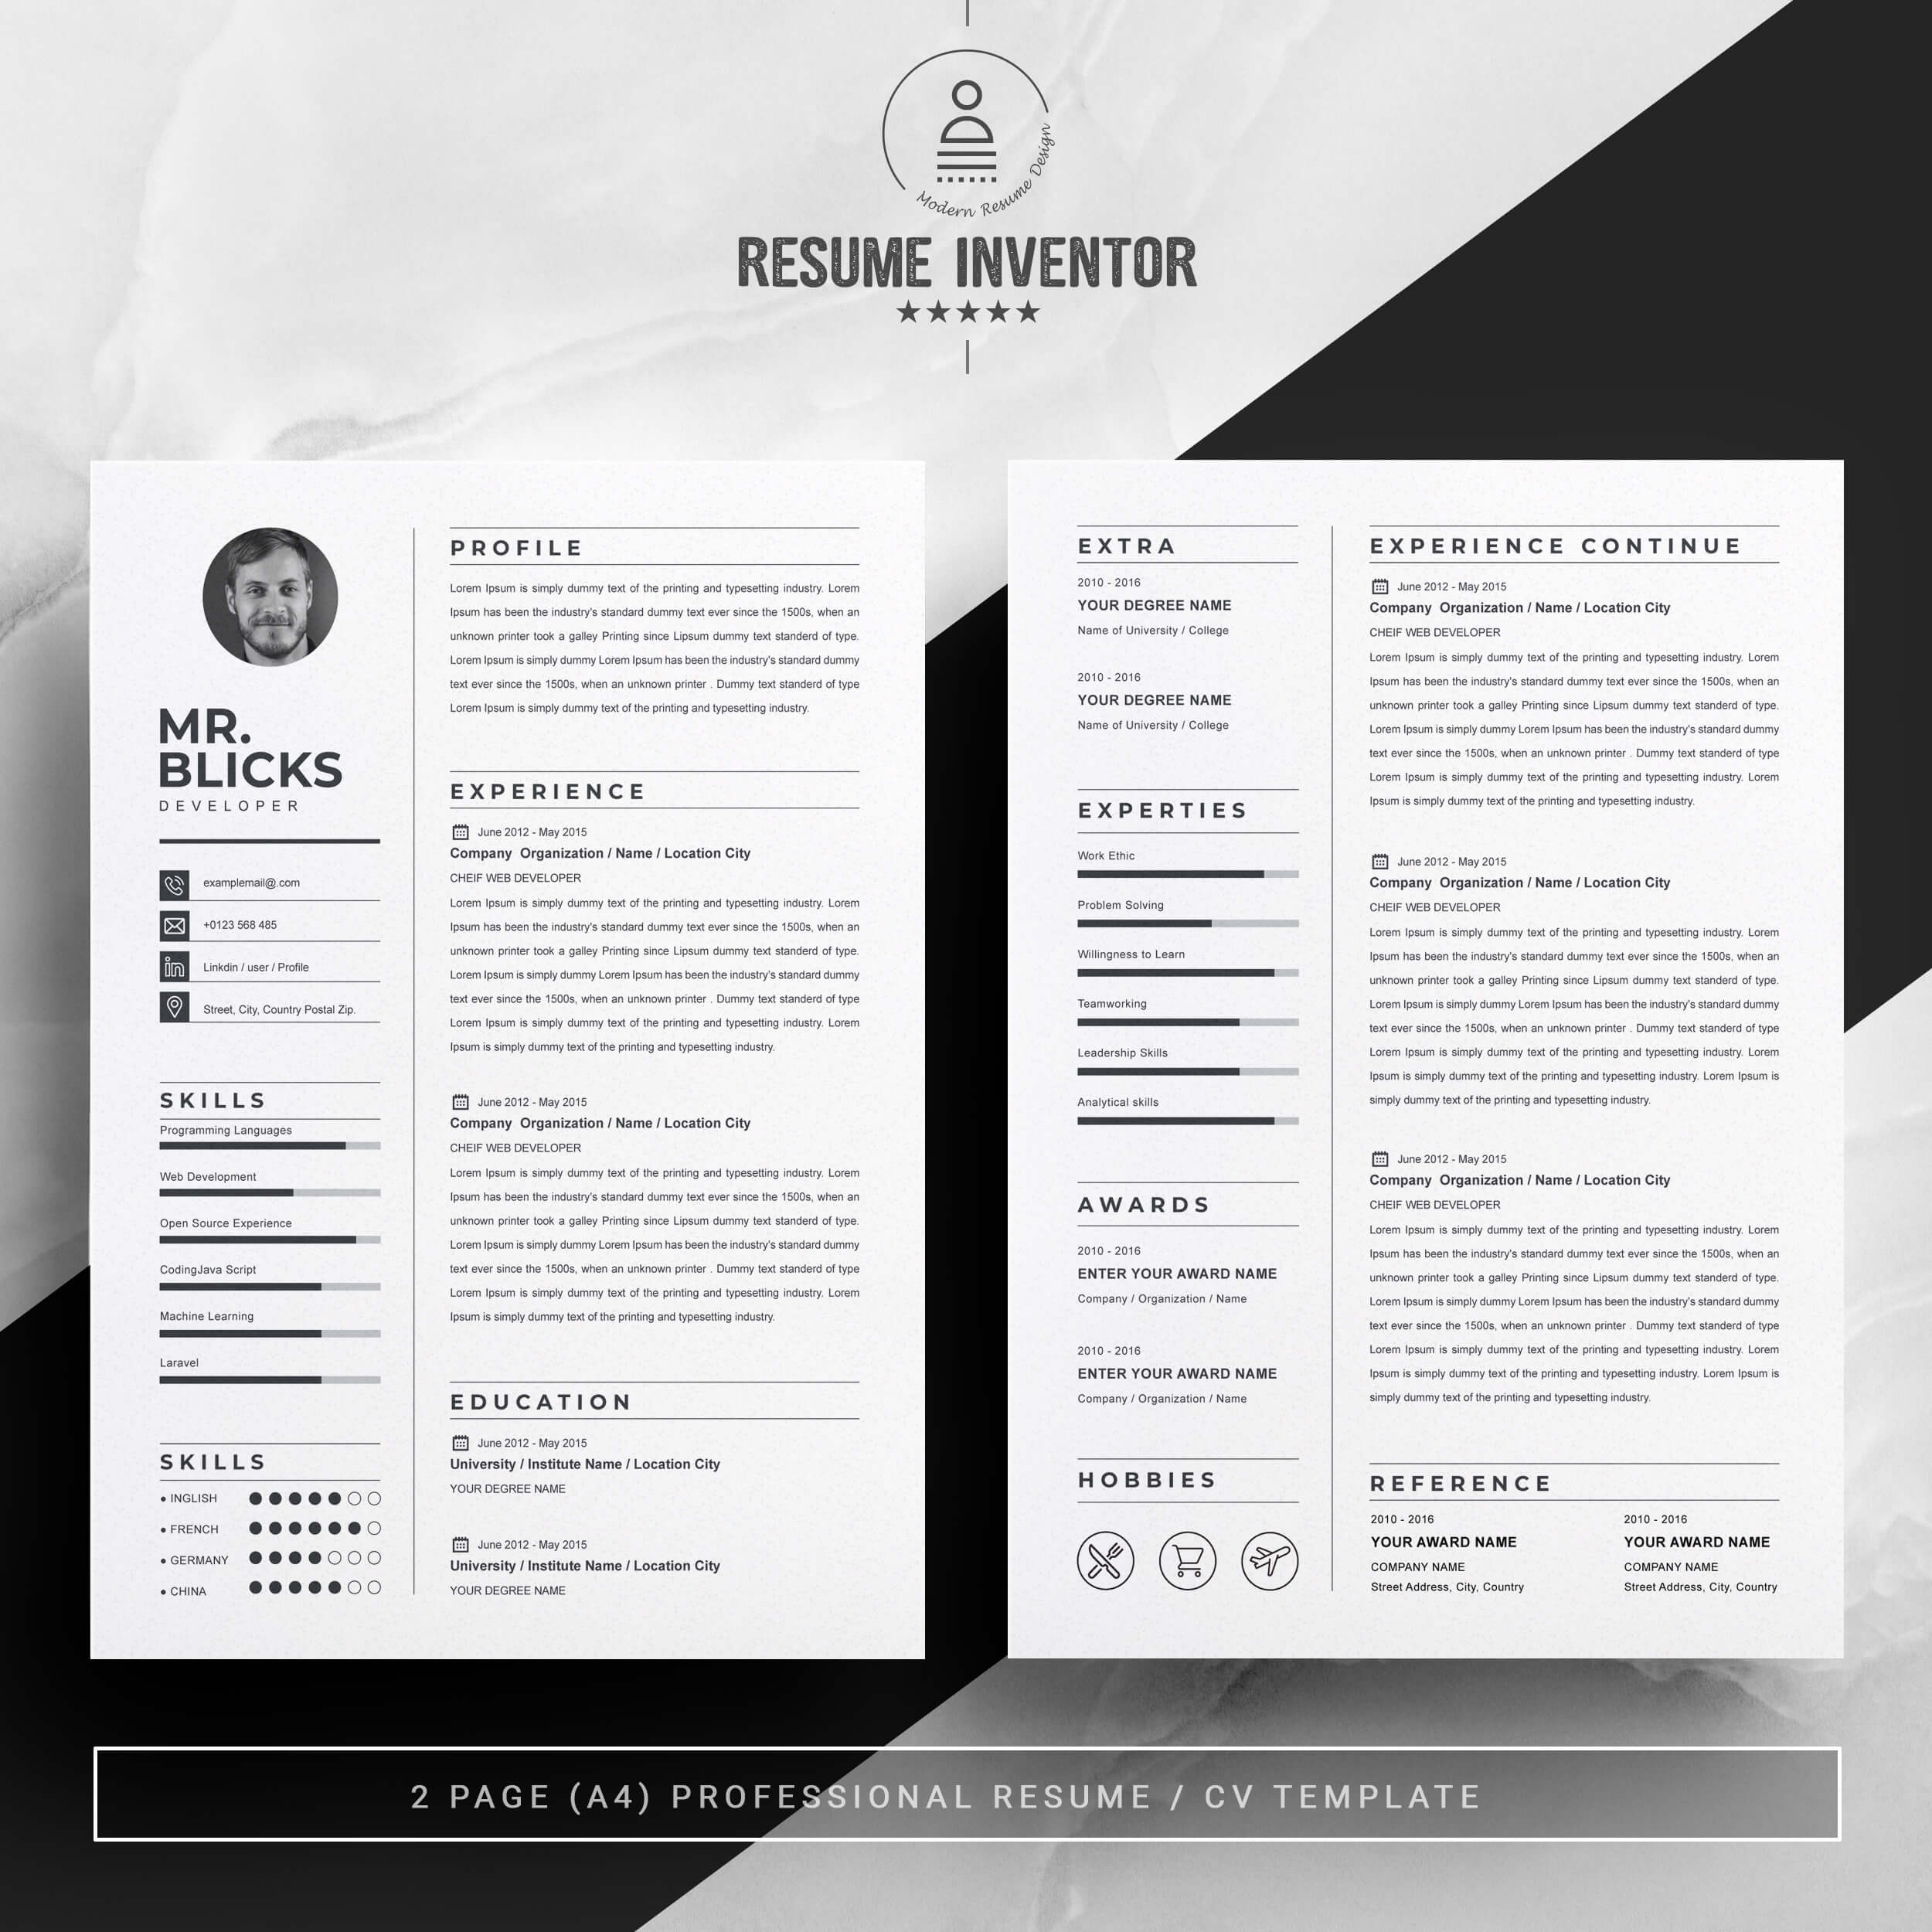 Developer Resume CV Template Design | Best Creative Timeline Resume Template preview image.